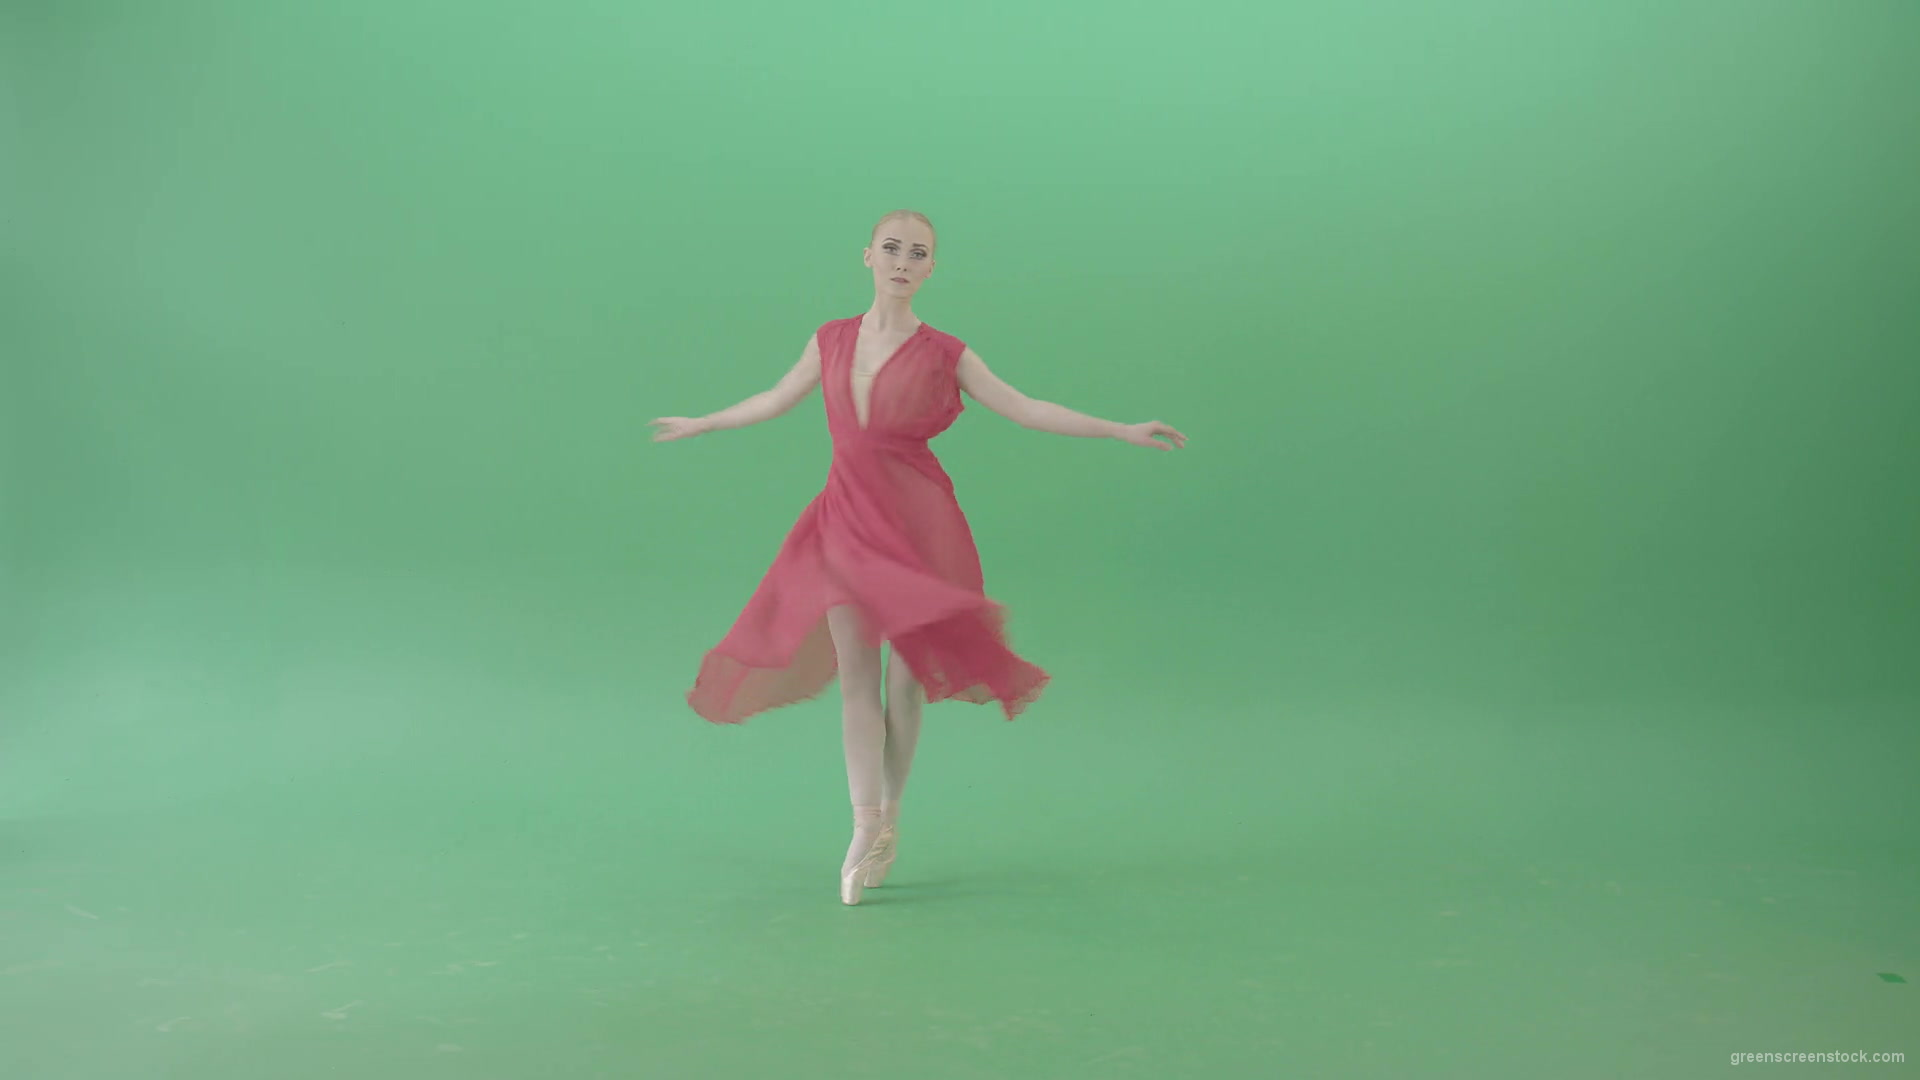 Light-Ballet-dancing-girl-in-red-wind-dress-spinning-on-green-screen-4K-Video-Footage-1920_005 Green Screen Stock